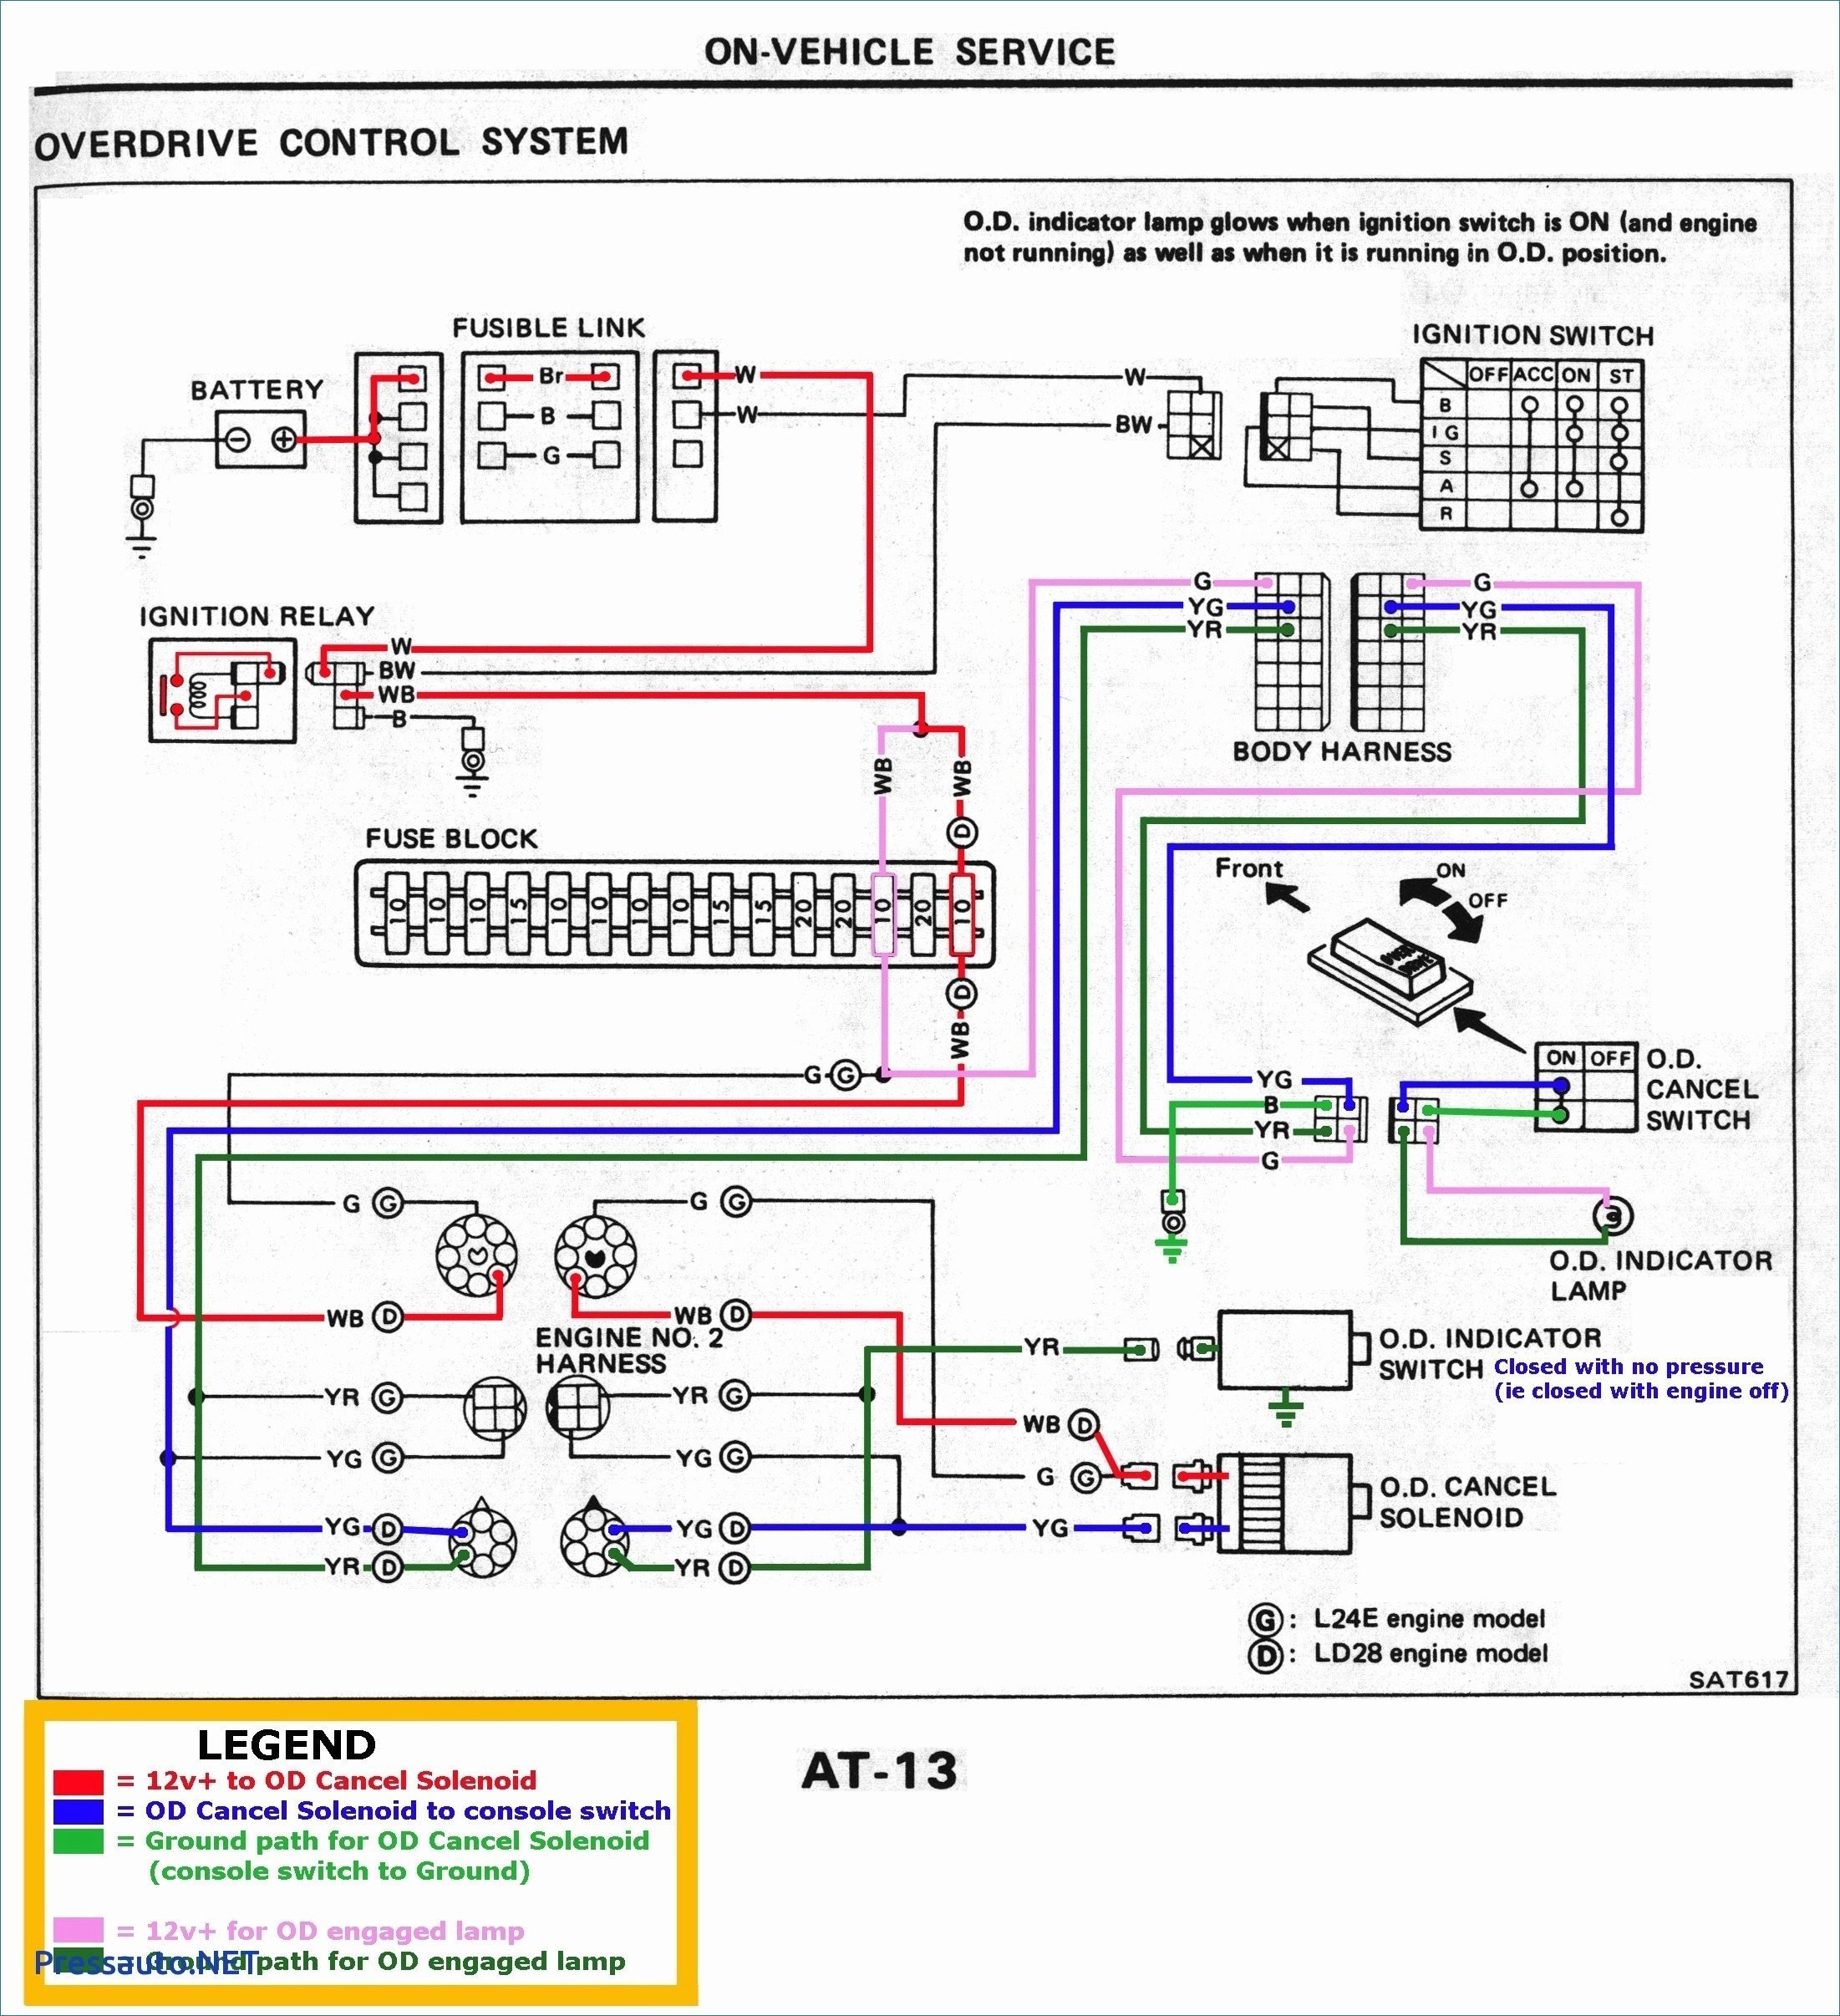 Power Supply Wiring Diagram Luxury Wiring Diagram Xbox 360 Power Supply Best Wiring Diagram Xbox 360